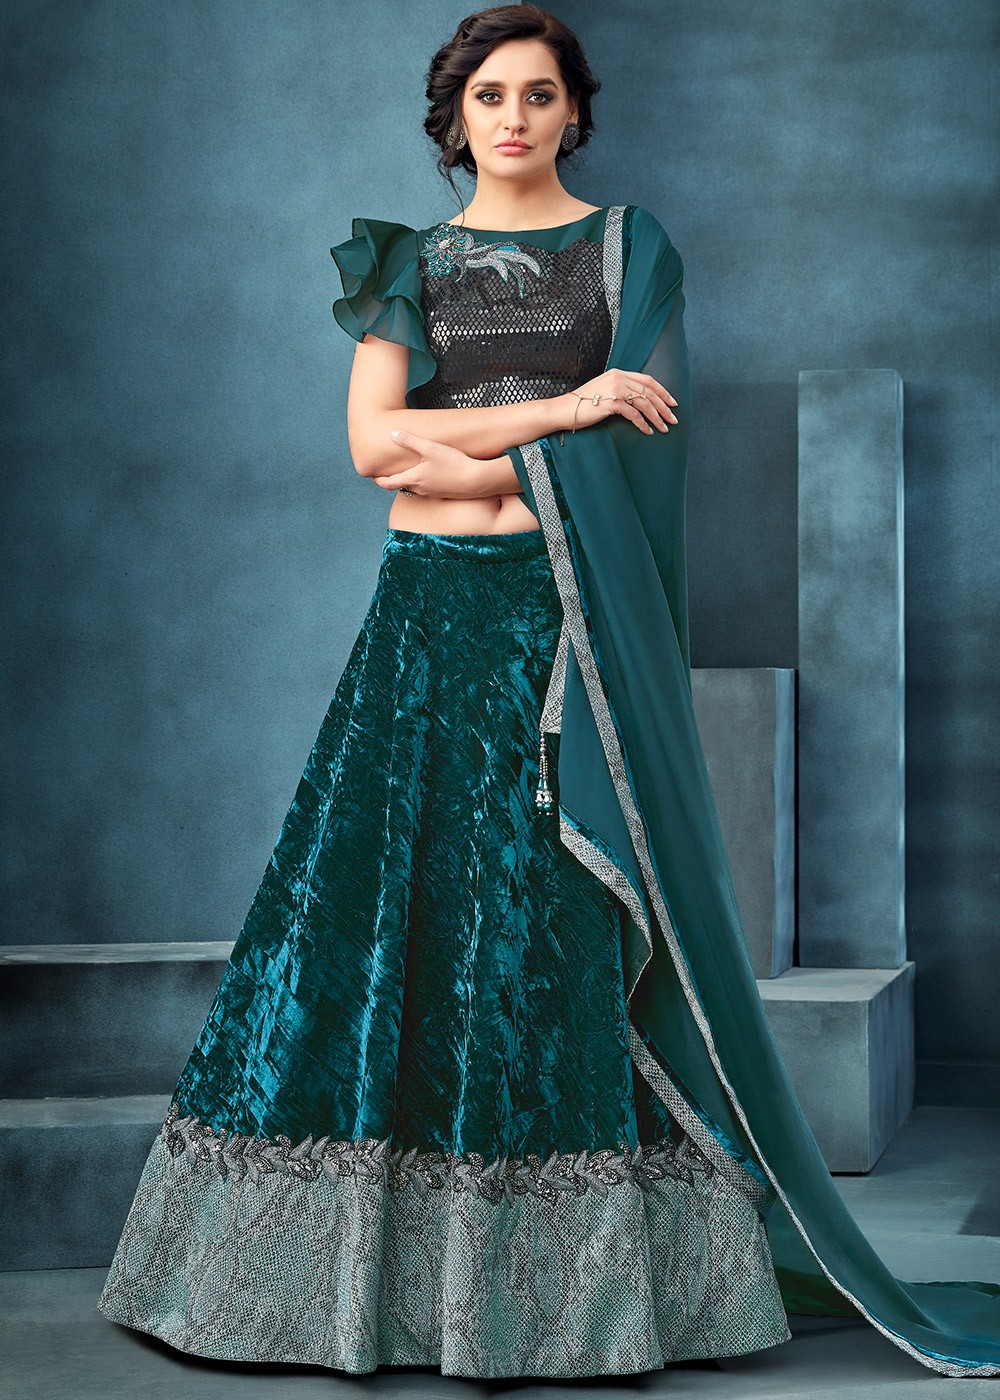 Bridal Lehenga For Mehendi: Elegant Designs For The Wedding Season That  Never Go Out Of Style